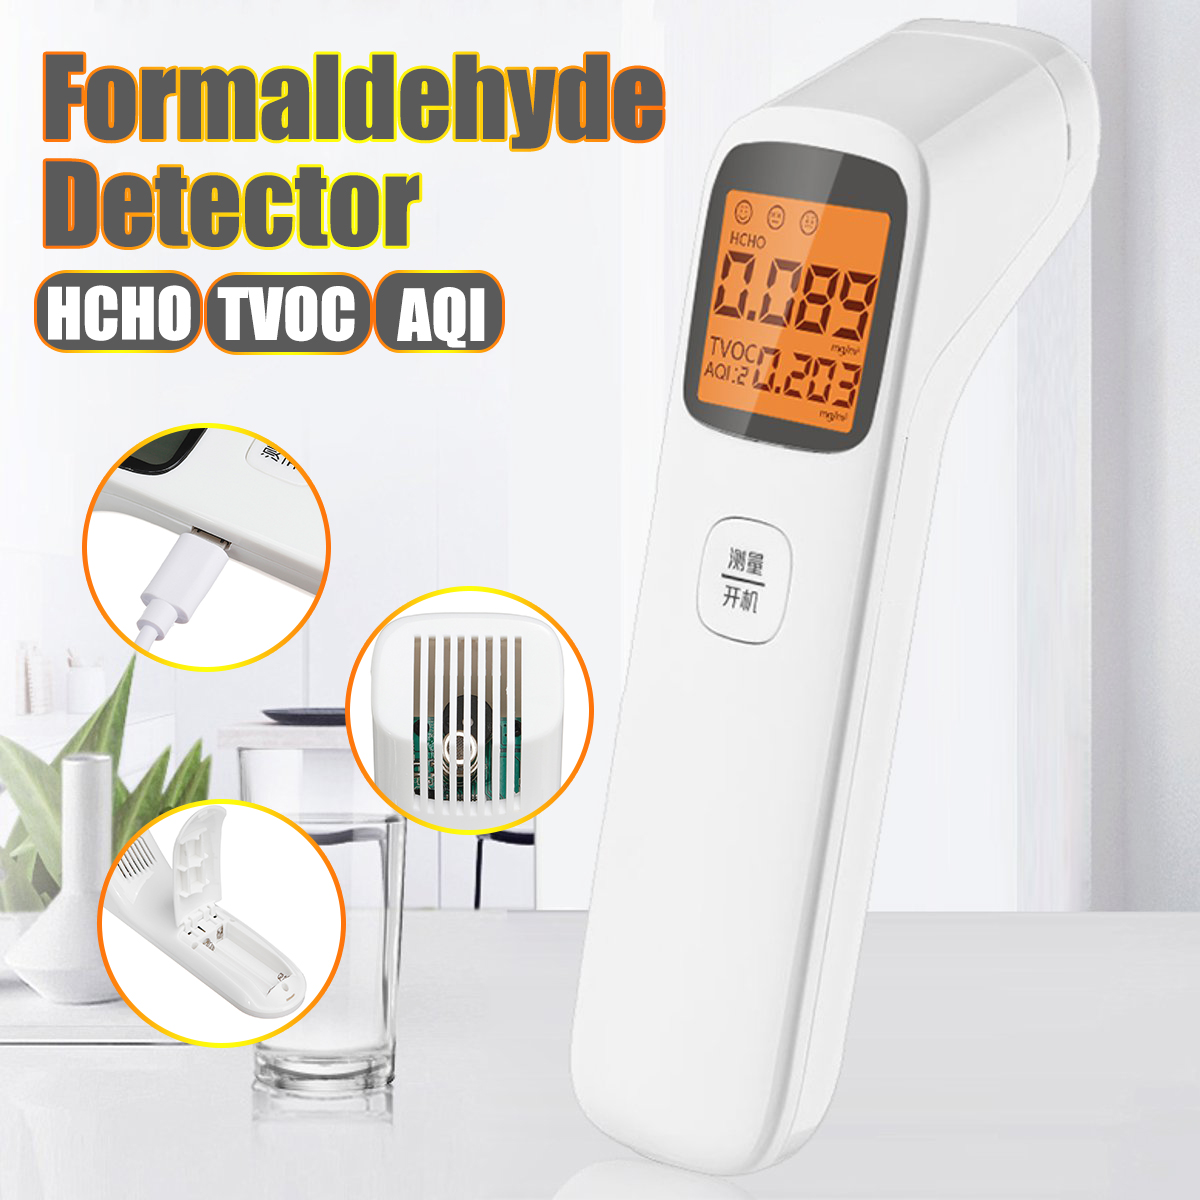 Smart-Air-Formaldehyde-Gas-Tester-Monitors-Tester-For-HCHOTVOCAQI-Detection-1468235-1